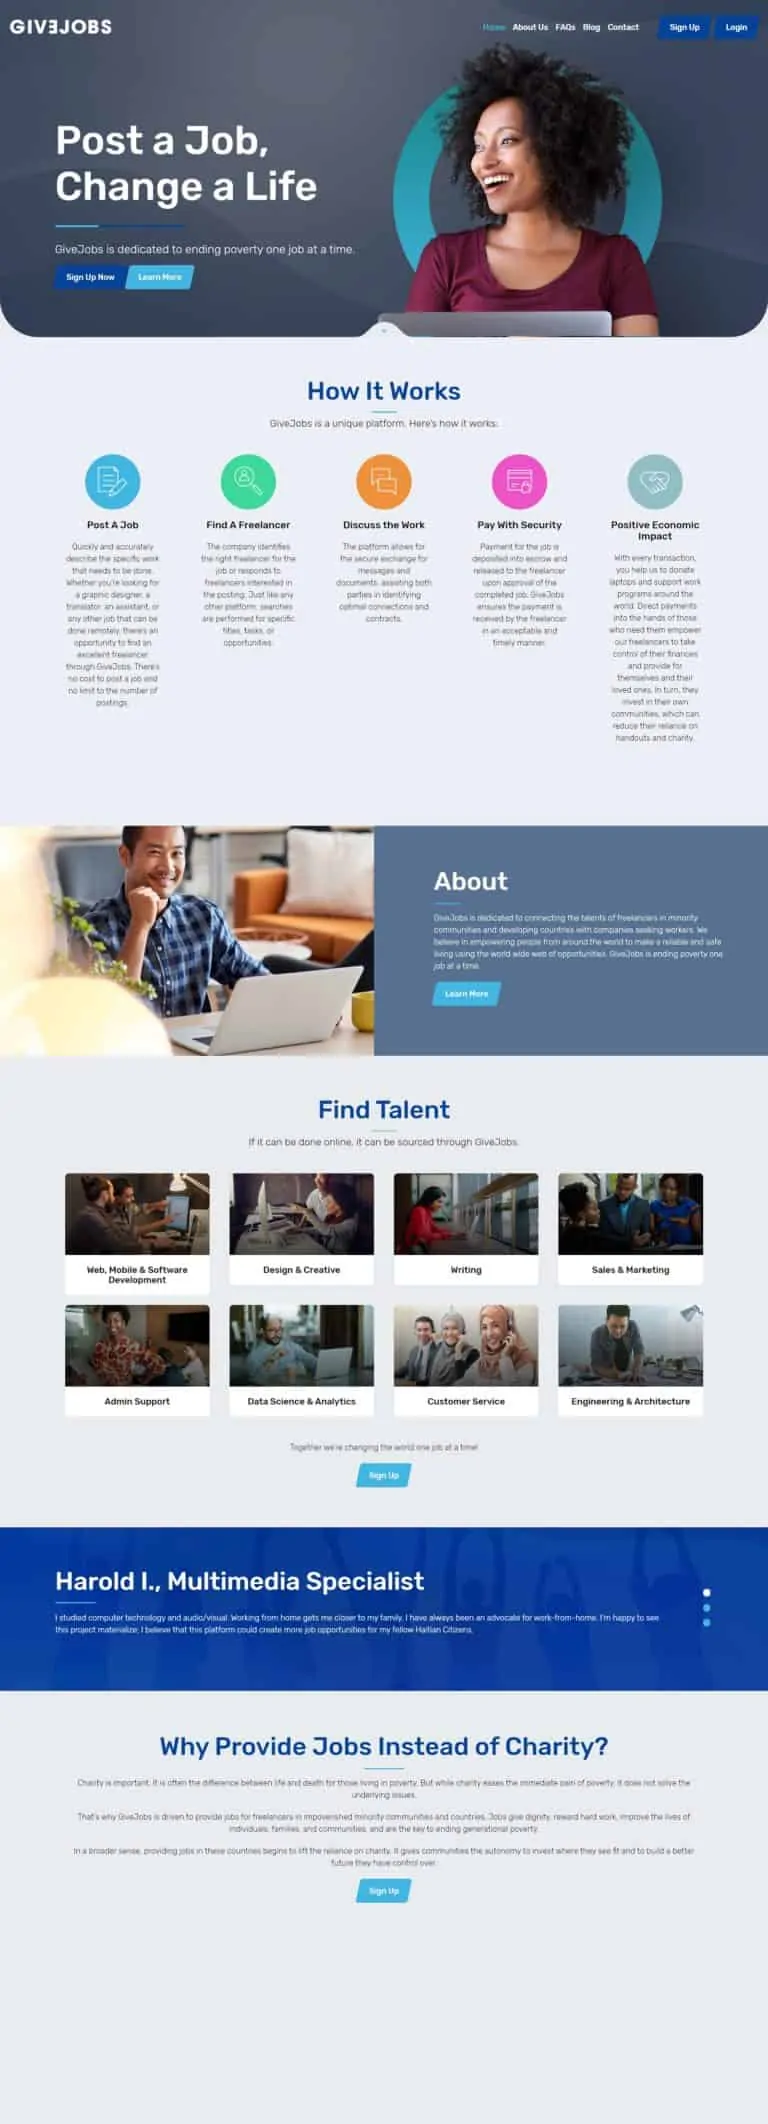 Custom SEO Web Design for a Job Placement Company